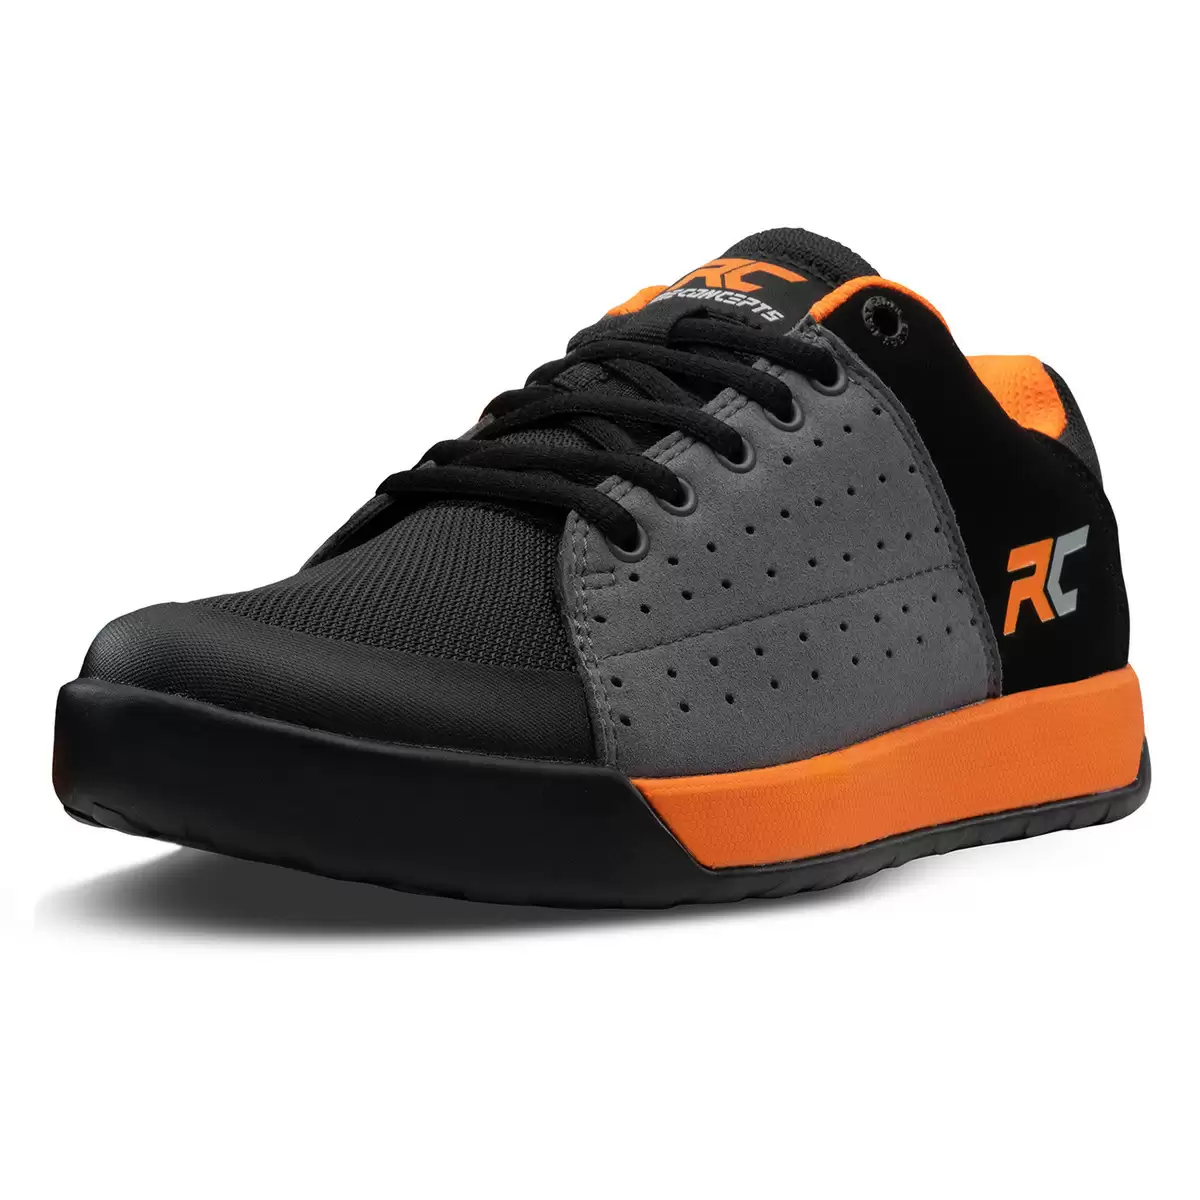 MTB Flat Shoes Livewire Orange Size 42.5 - image